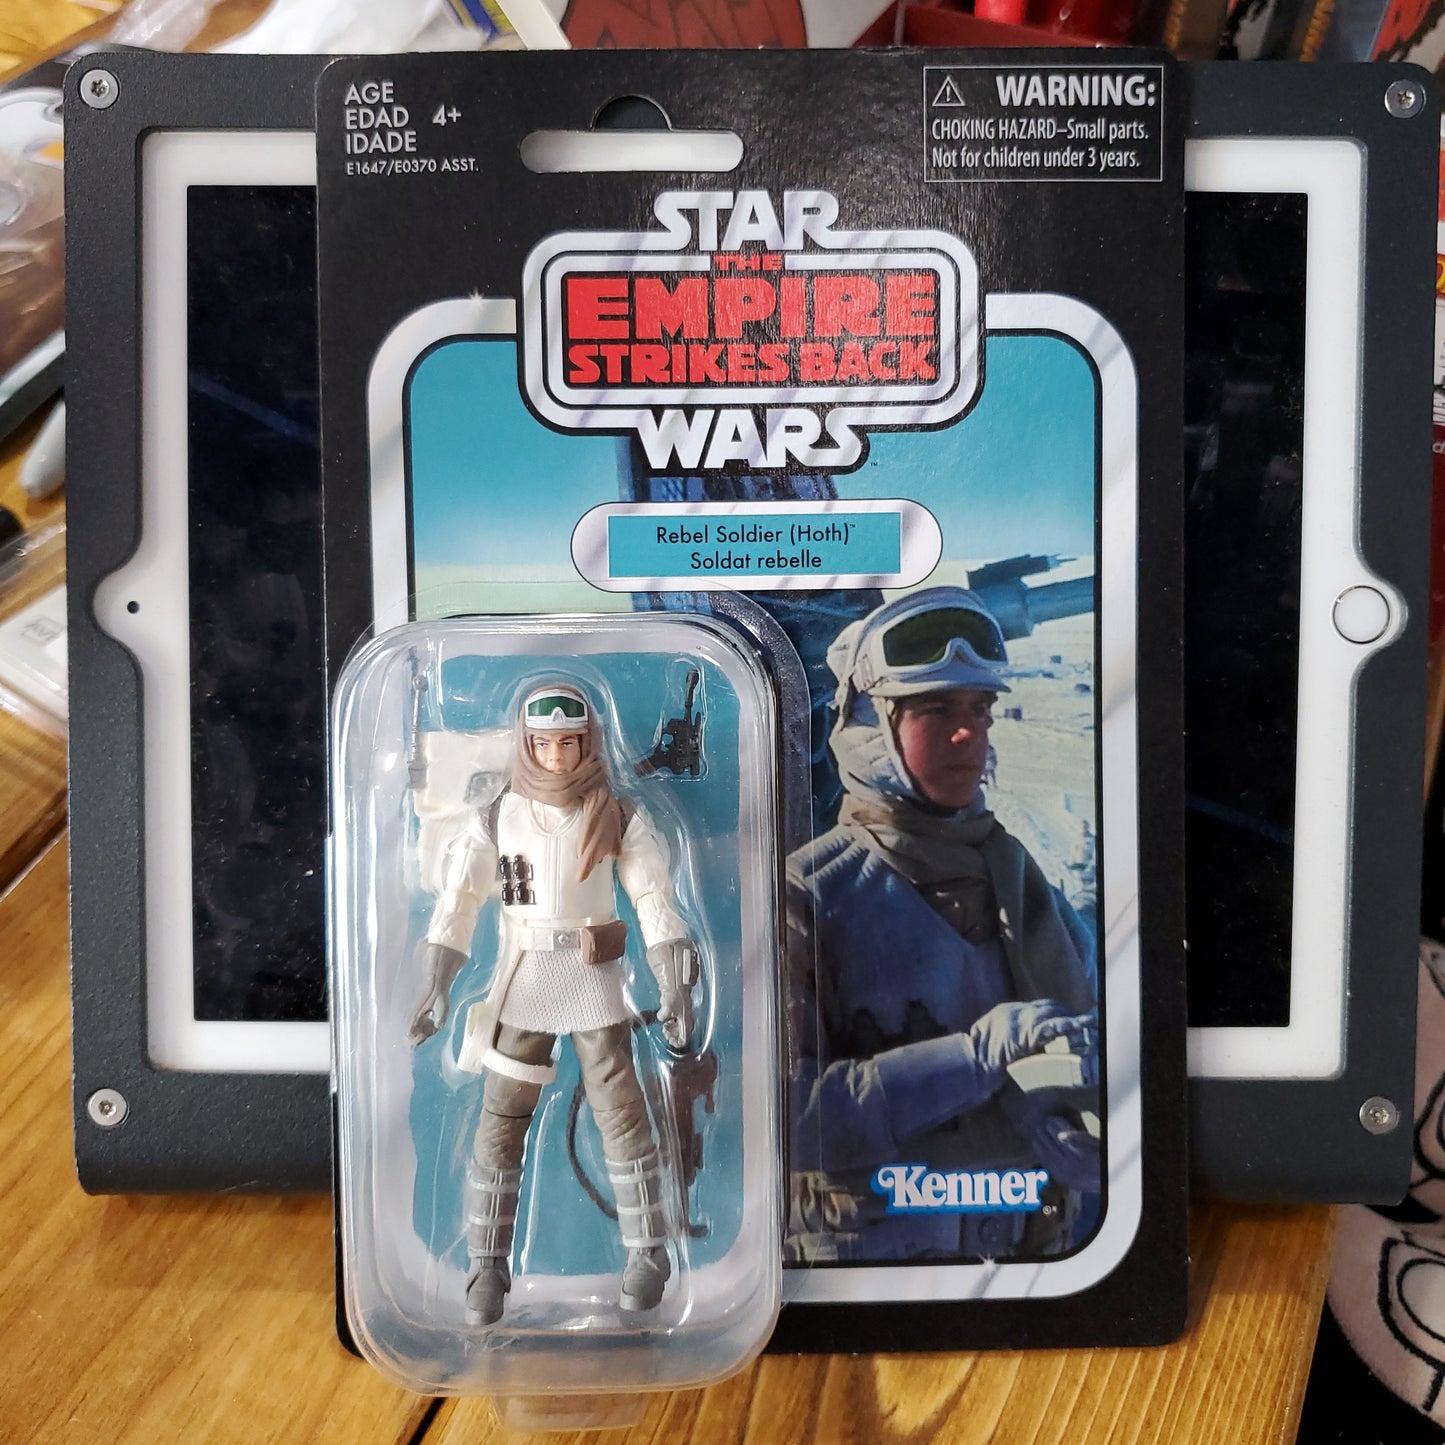 Star Wars: Empire Strikes Back - Rebel Soldier (Hoth) - Hasbro Action Figure